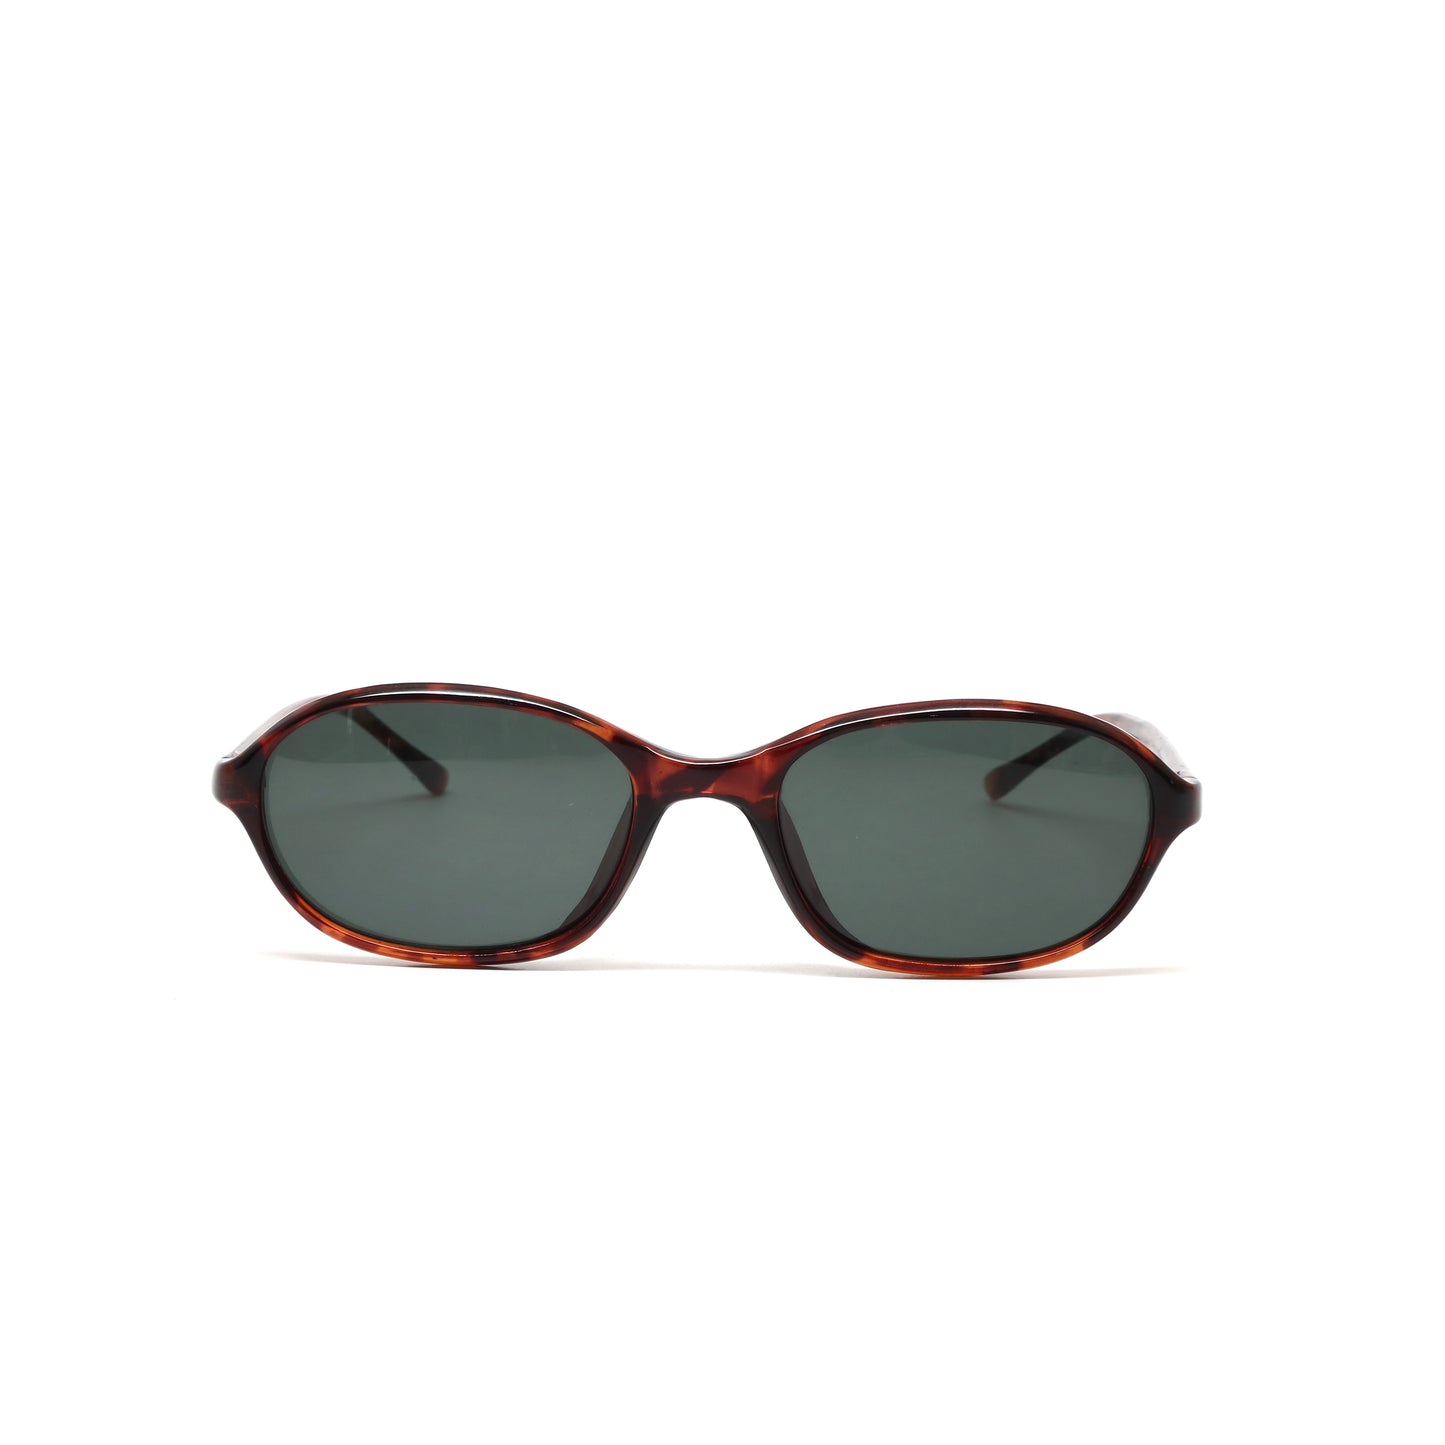 Vintage Standard Size 90s Deadstock Oval Frame Sunglasses - Tortoise